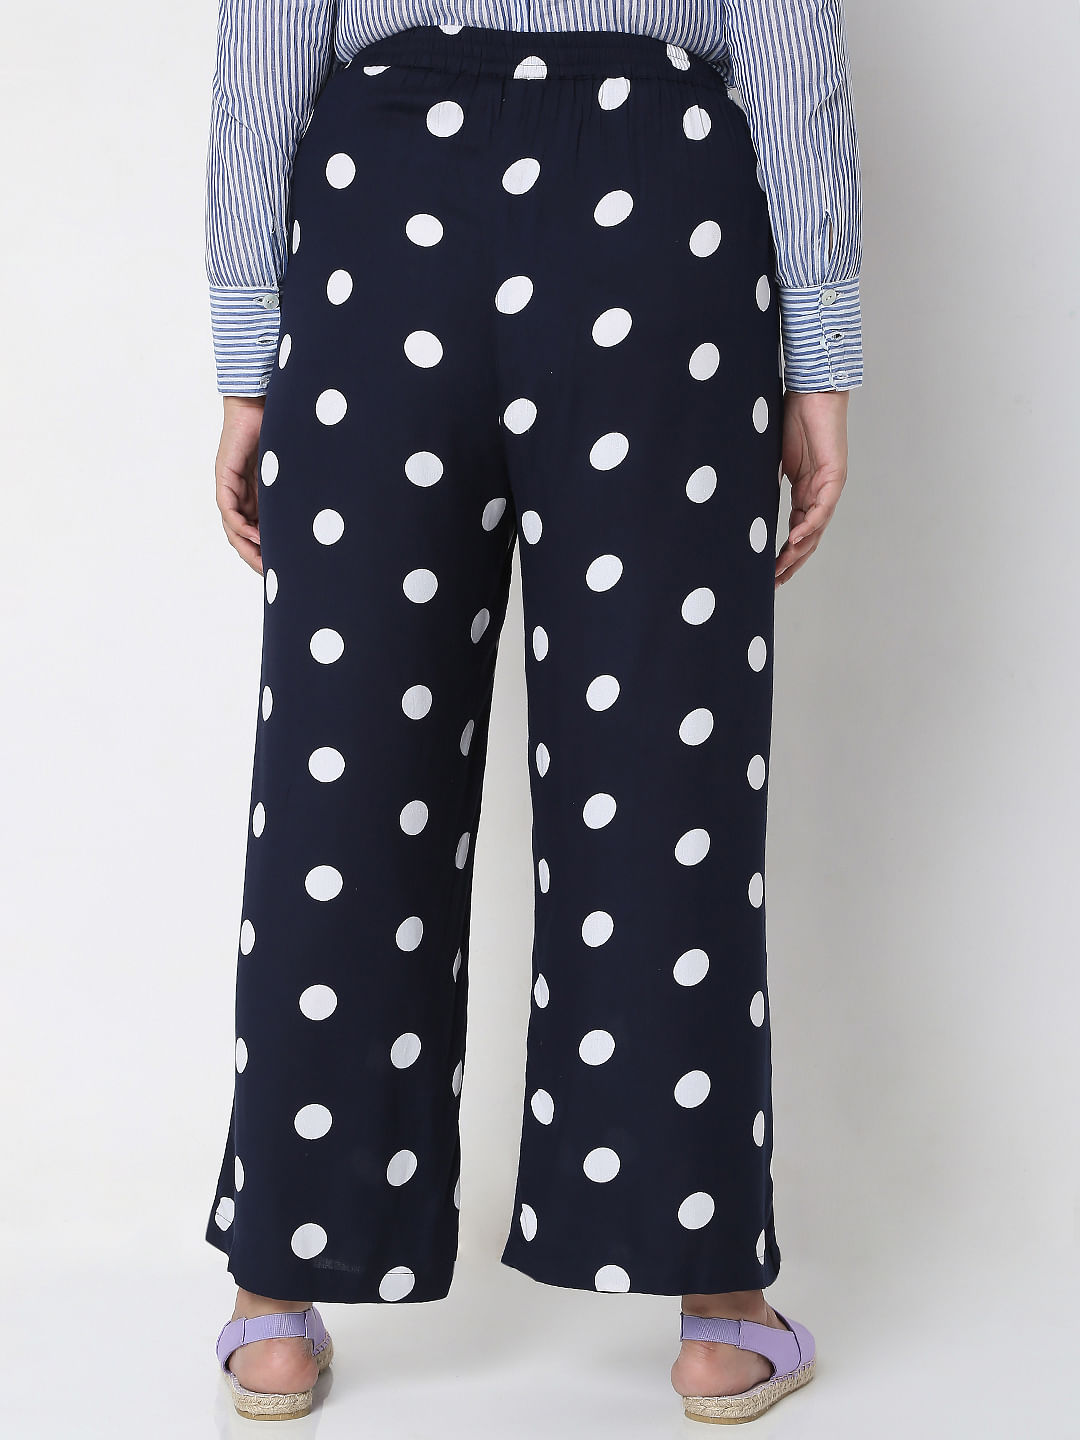 Yara Shahidis PolkaDot Pants Deserve A Spot In Your WarmWeather Lineup